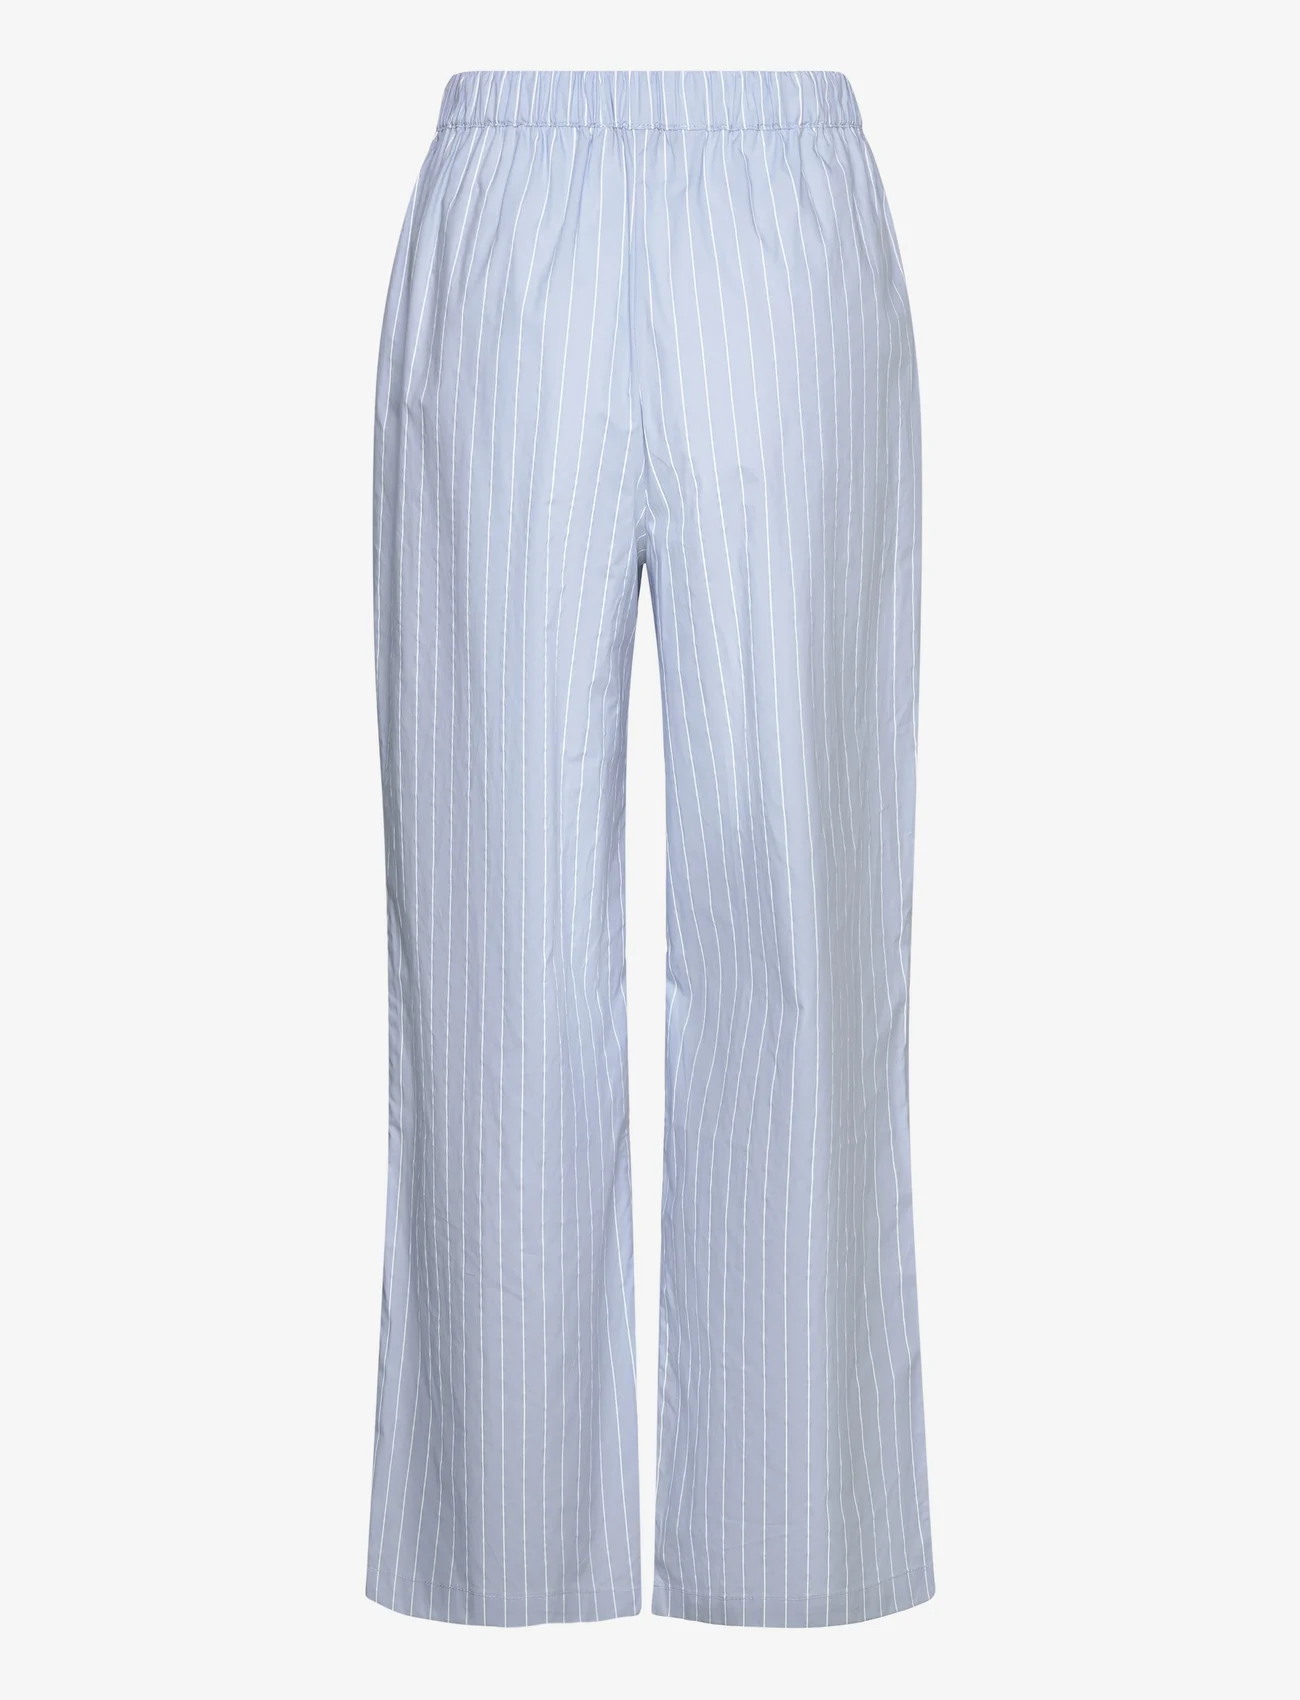 A-View - Brenda pants - leveälahkeiset housut - blue stripe - 1